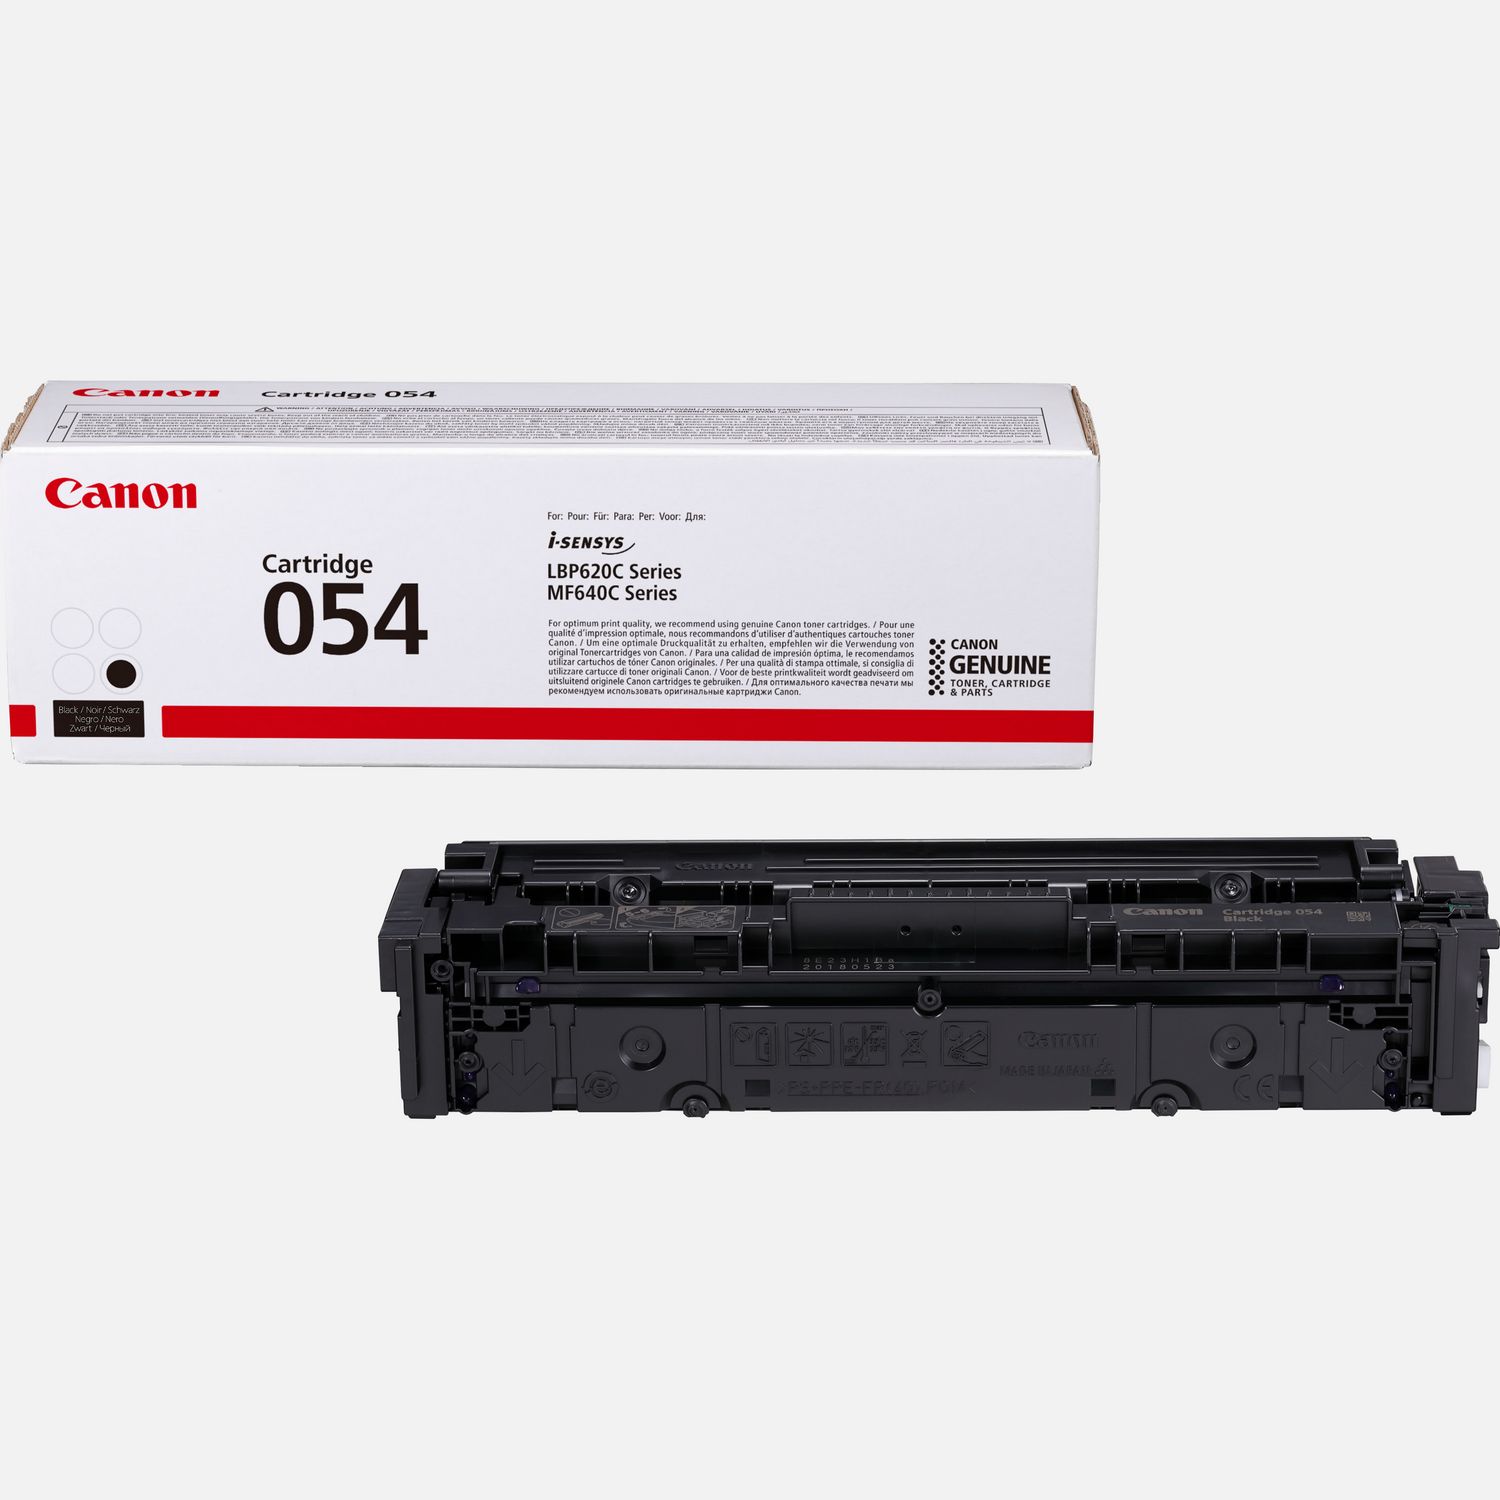 Canon 054-tonercartridge, zwart — Canon Nederland Store